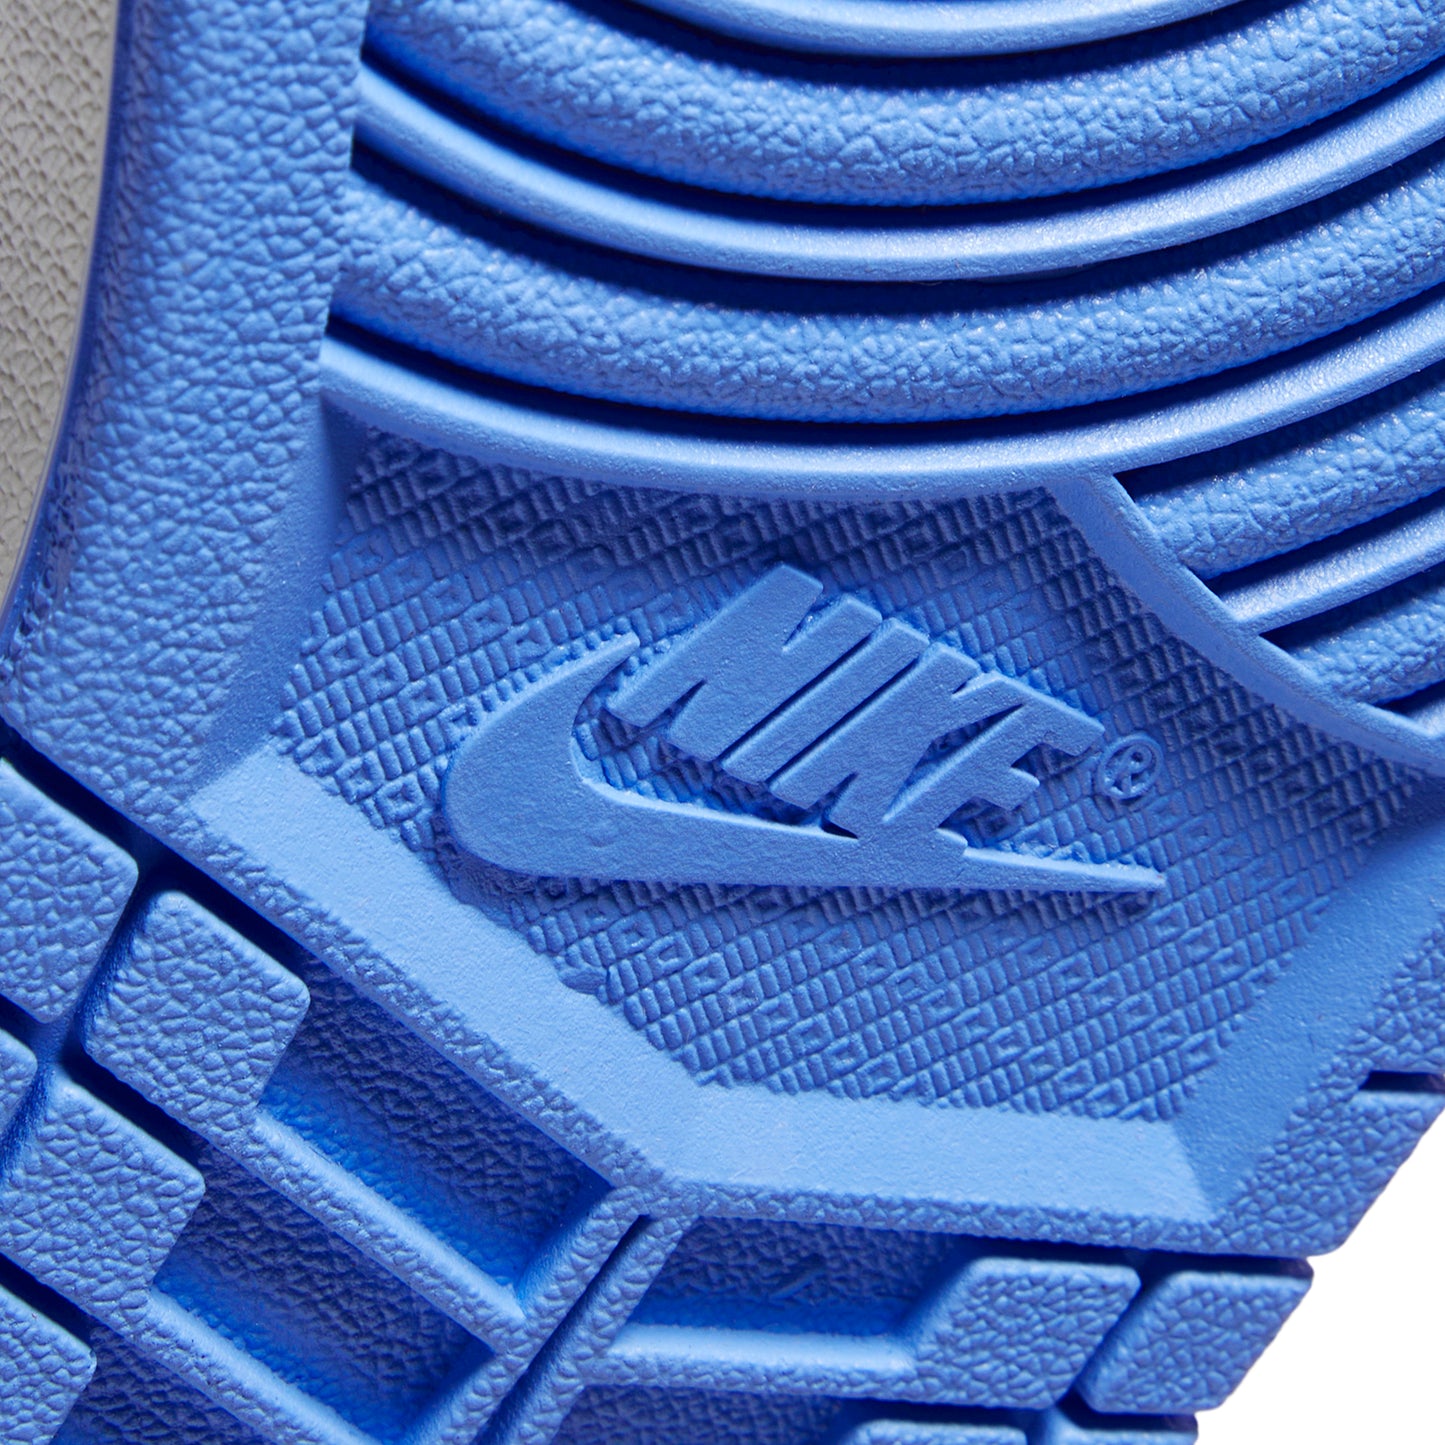 Nike Air Jordan 1 Low (Black/University Blue/White)